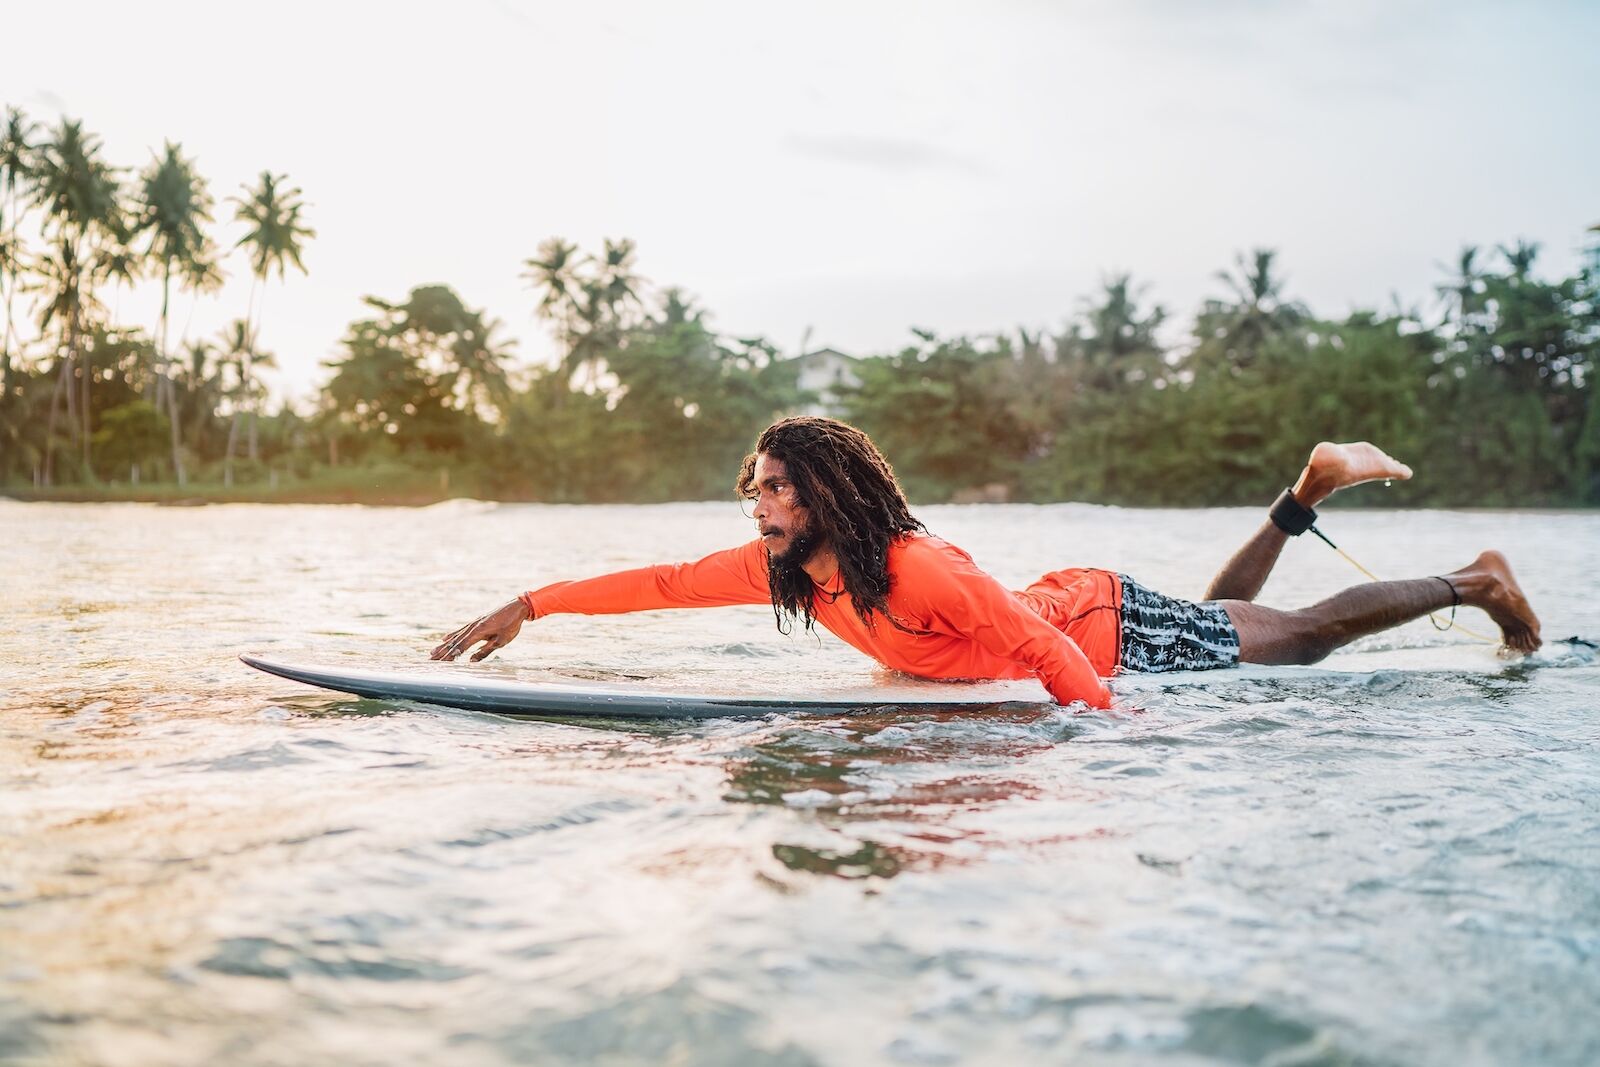 Man surfing in Hawaii